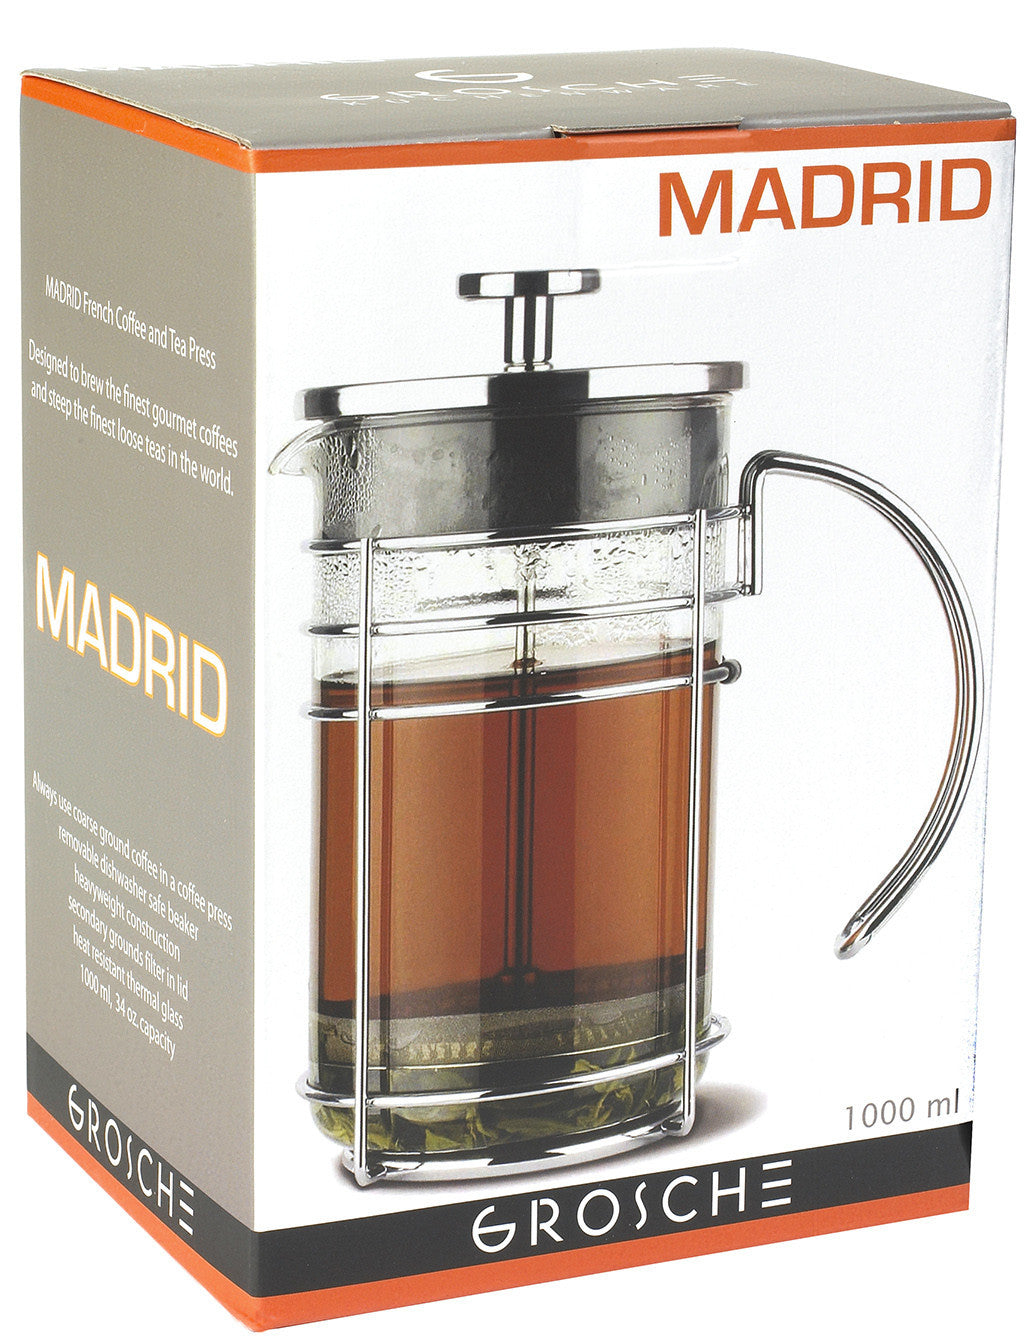 Madrid Premium French Press Coffee Maker, by Grosche